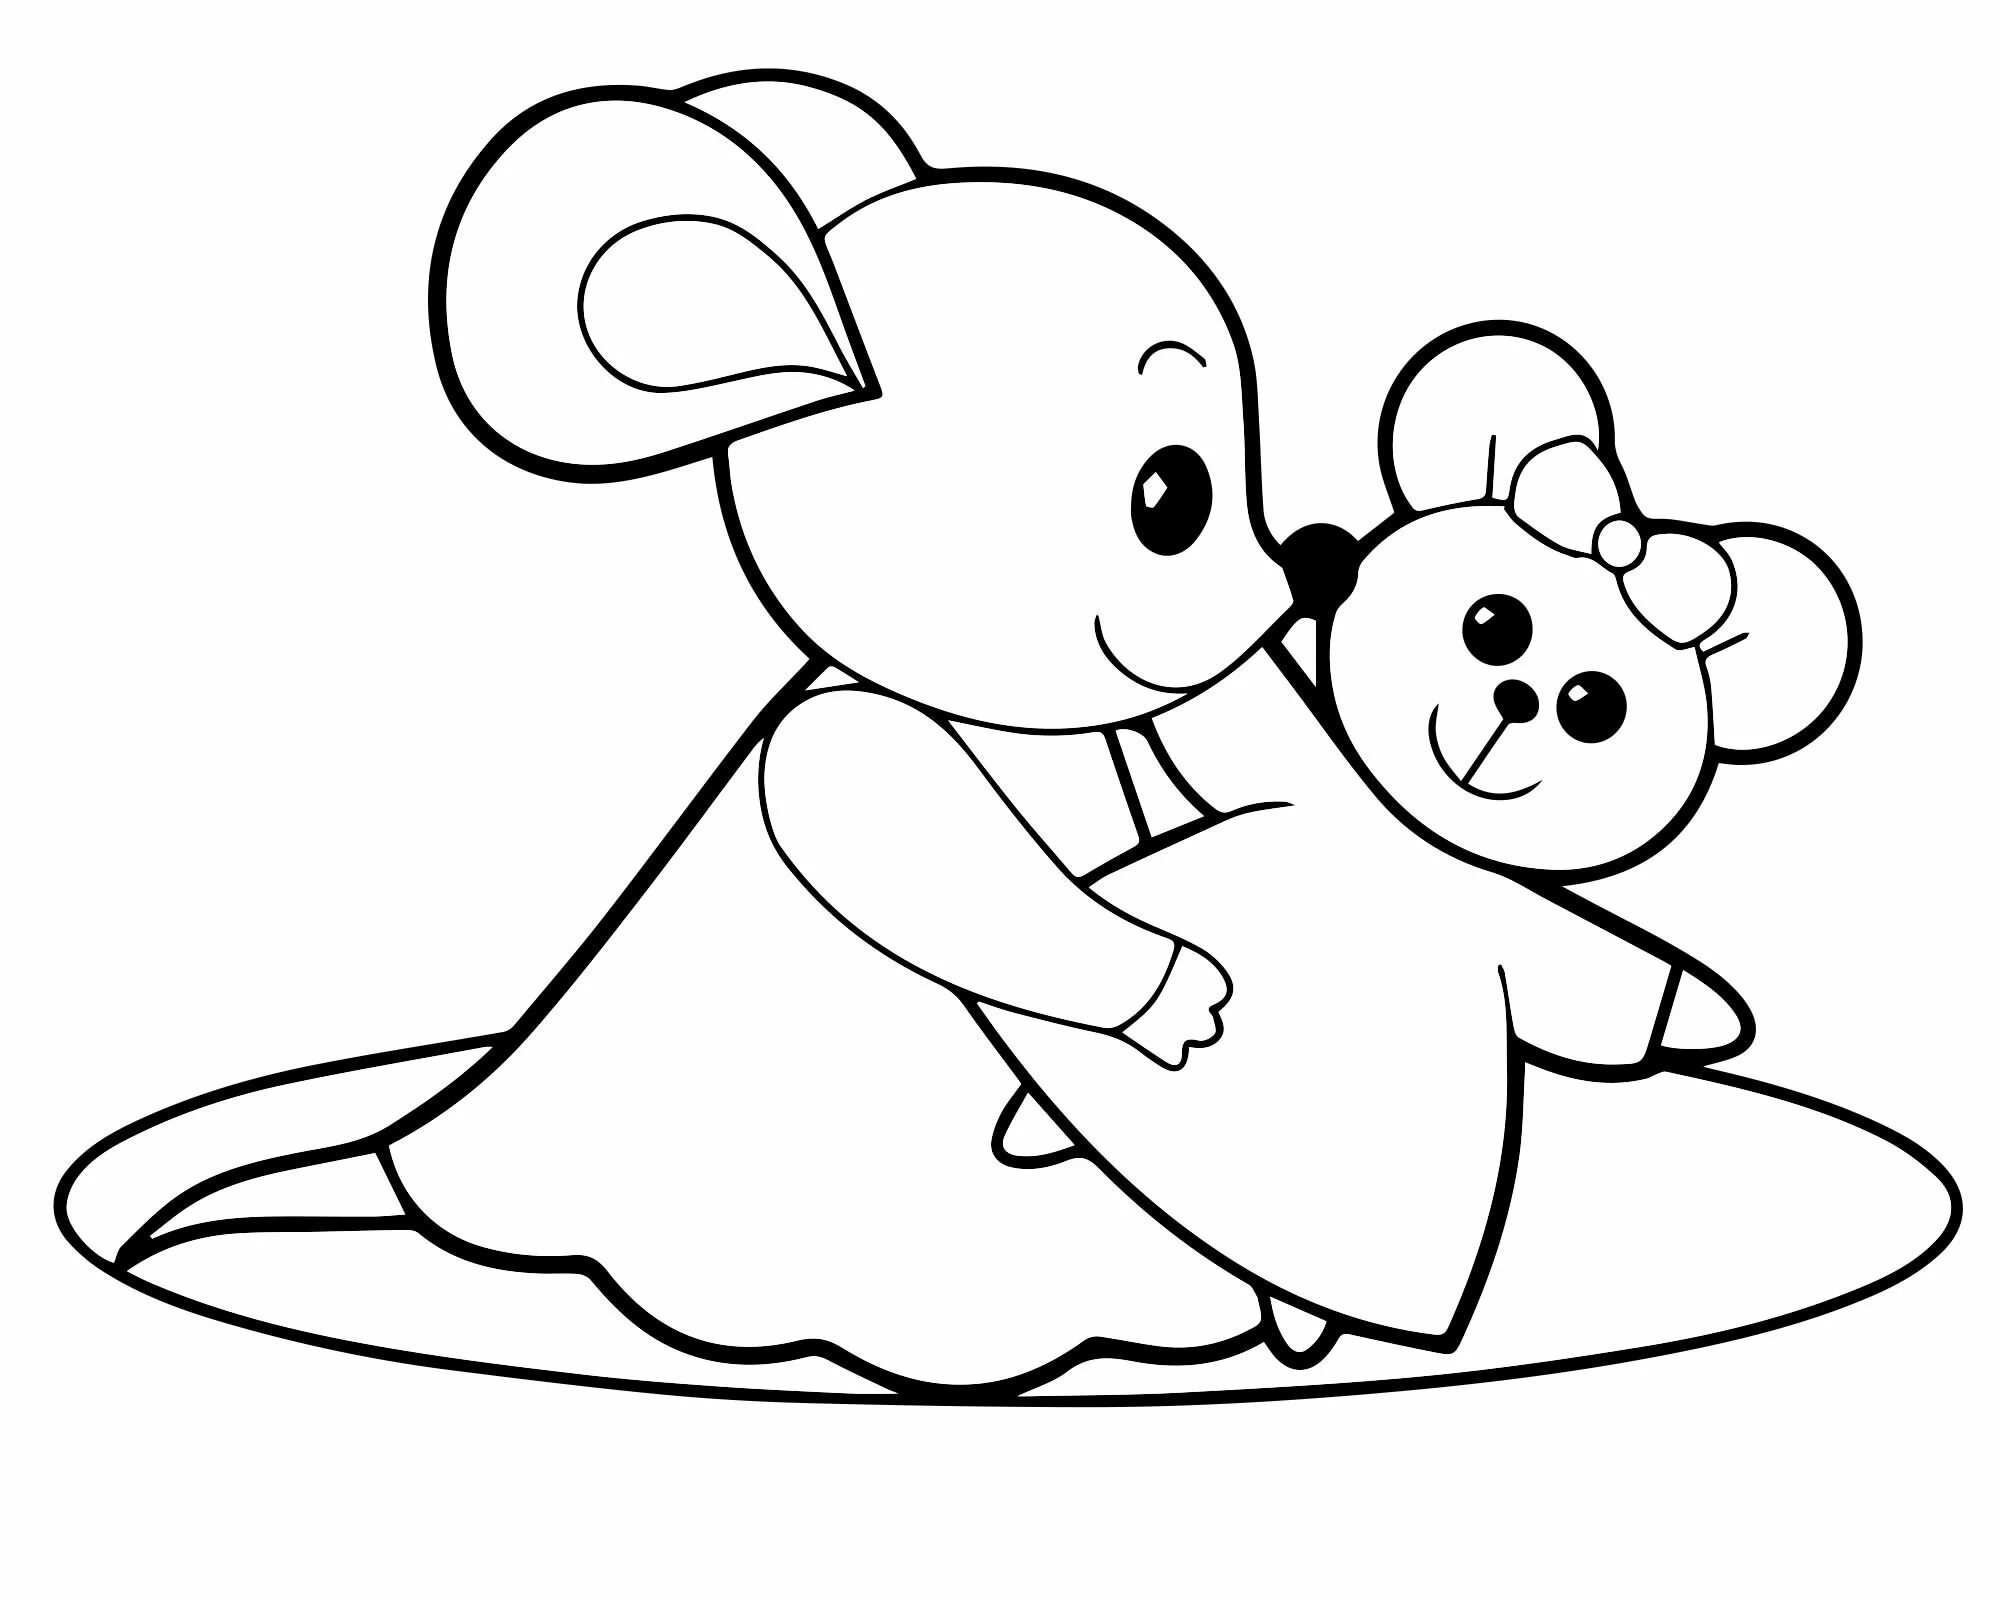 Раскраска мышка. Раскраска мышонок. Раскраски для малышей. Мышка раскраска для детей. Раскраска мышь распечатать